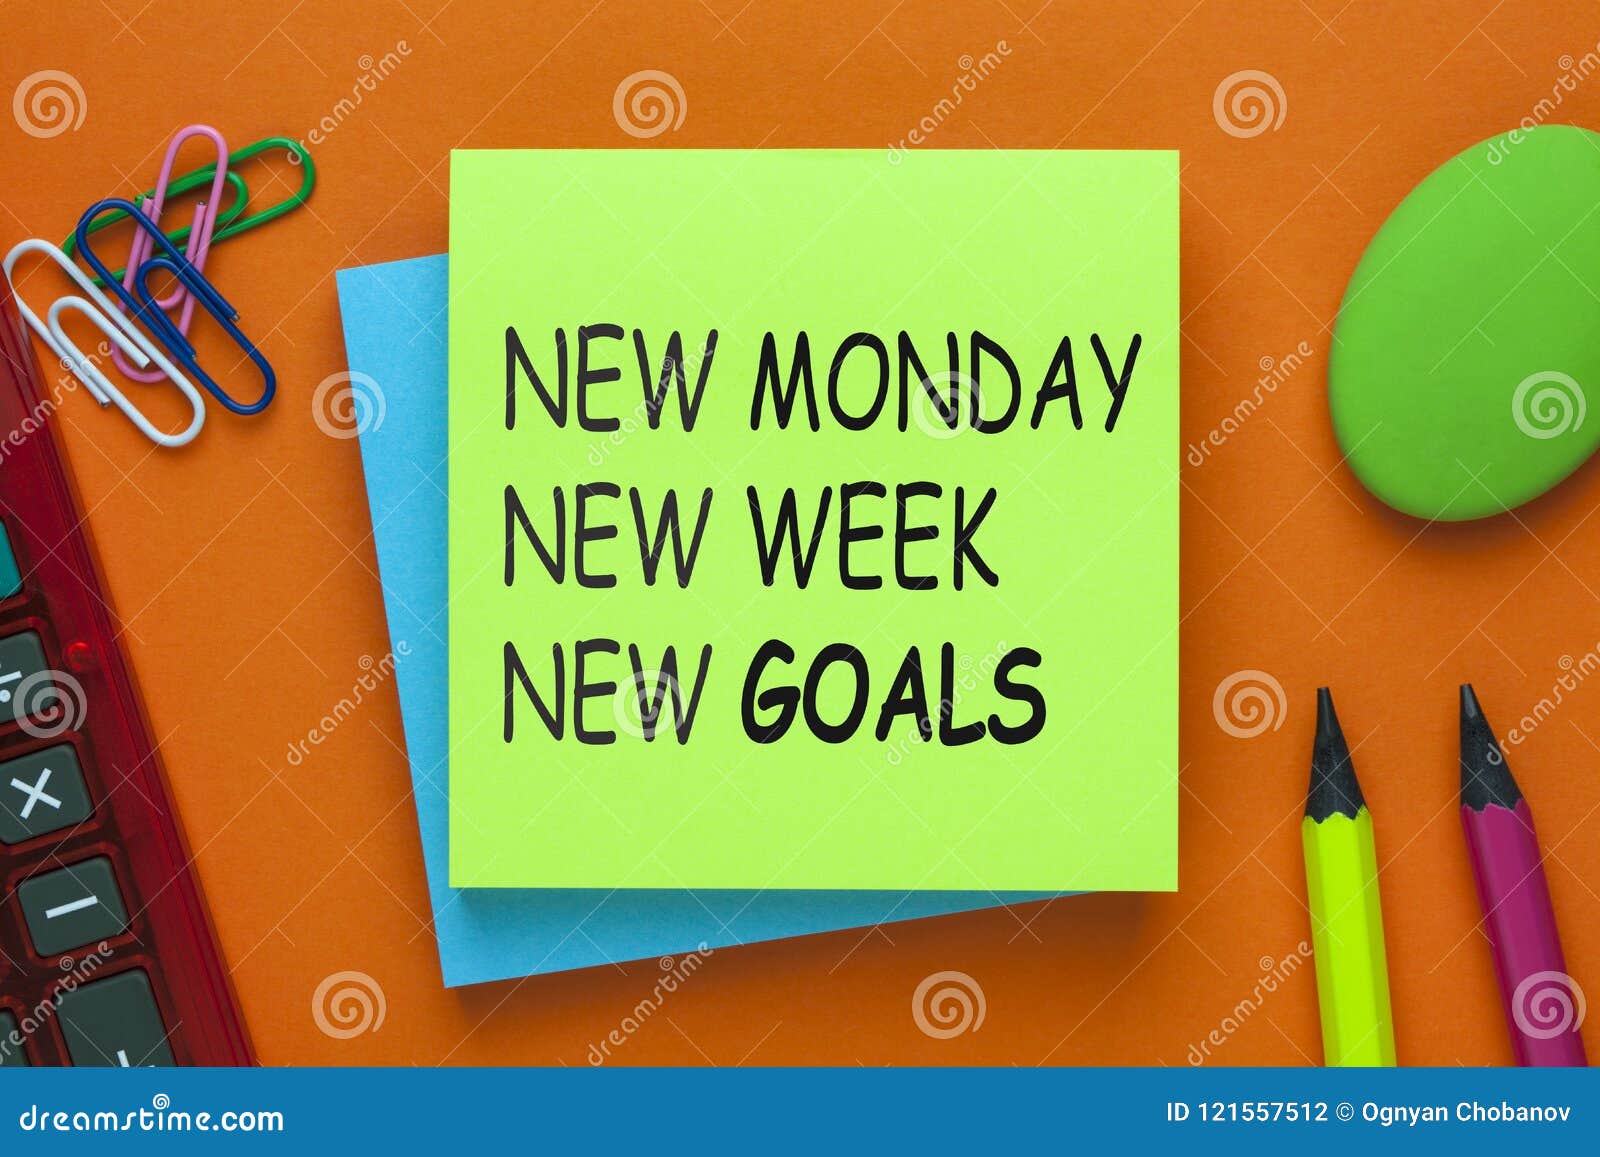 new monday new week new goals